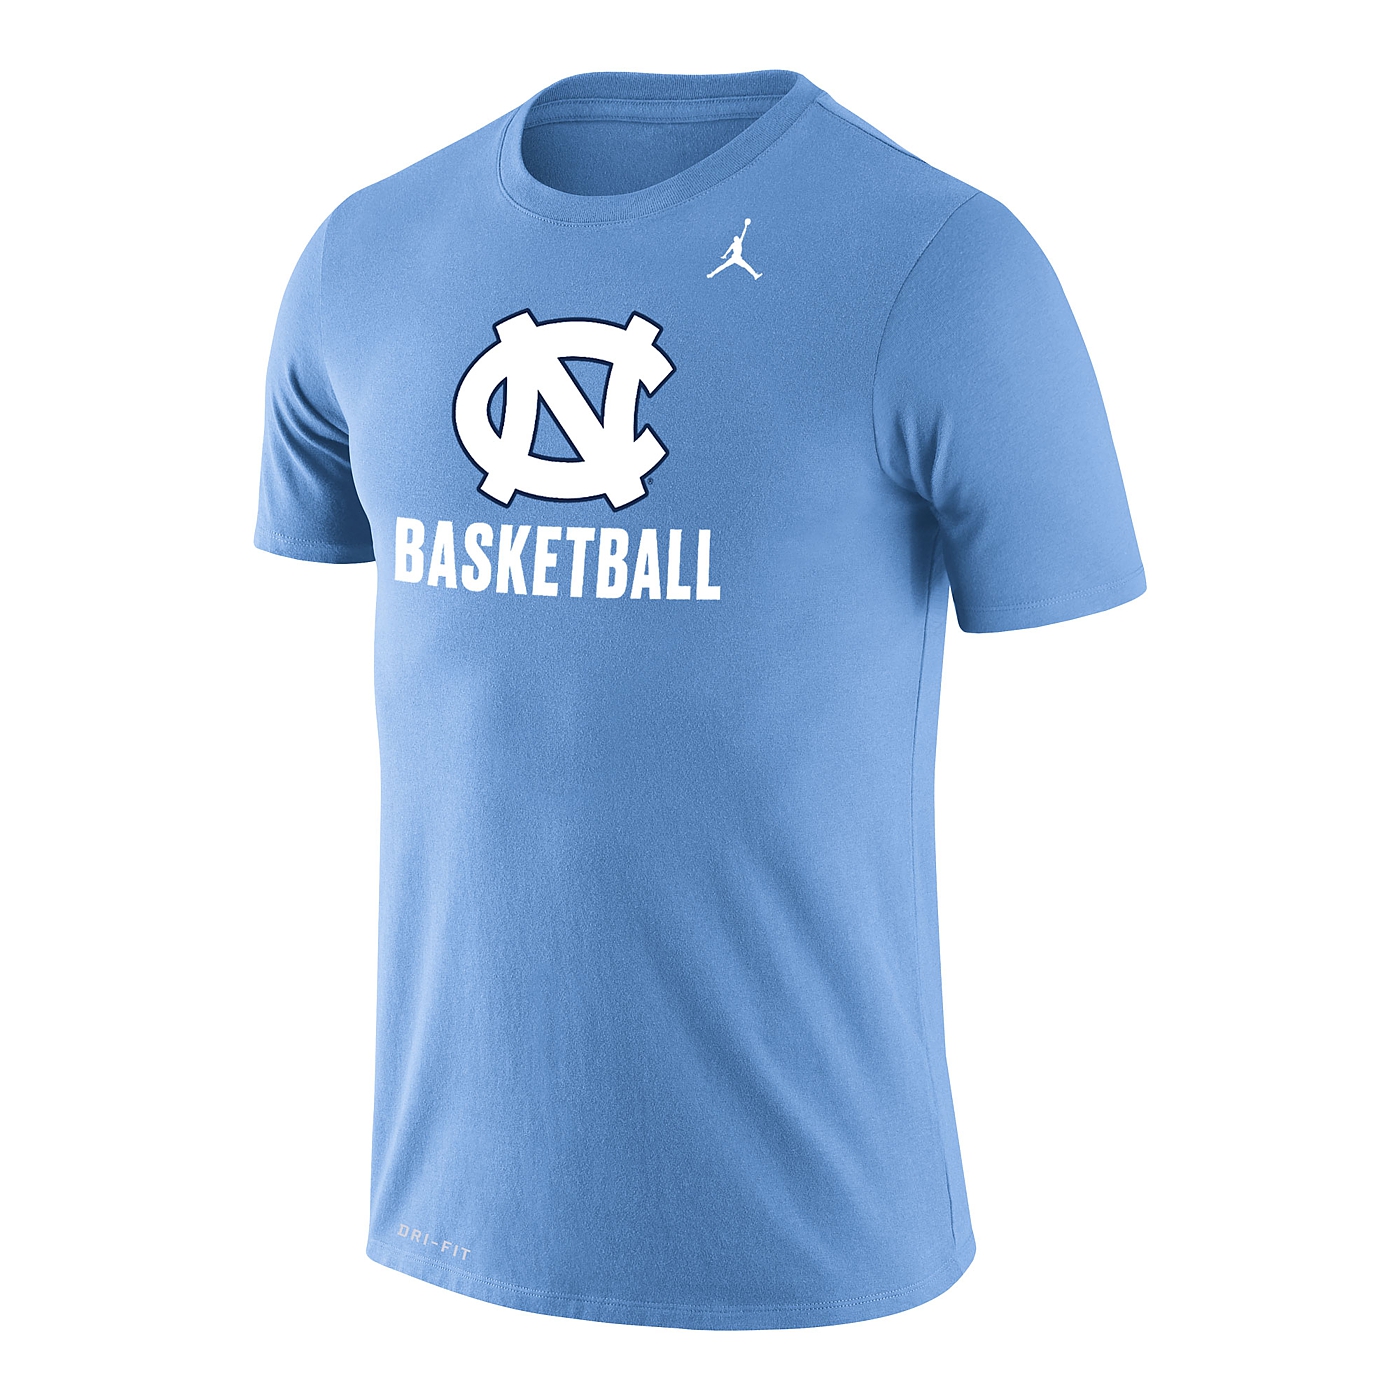 Johnny T-shirt - North Carolina Tar Heels - Nike Basketball Logo